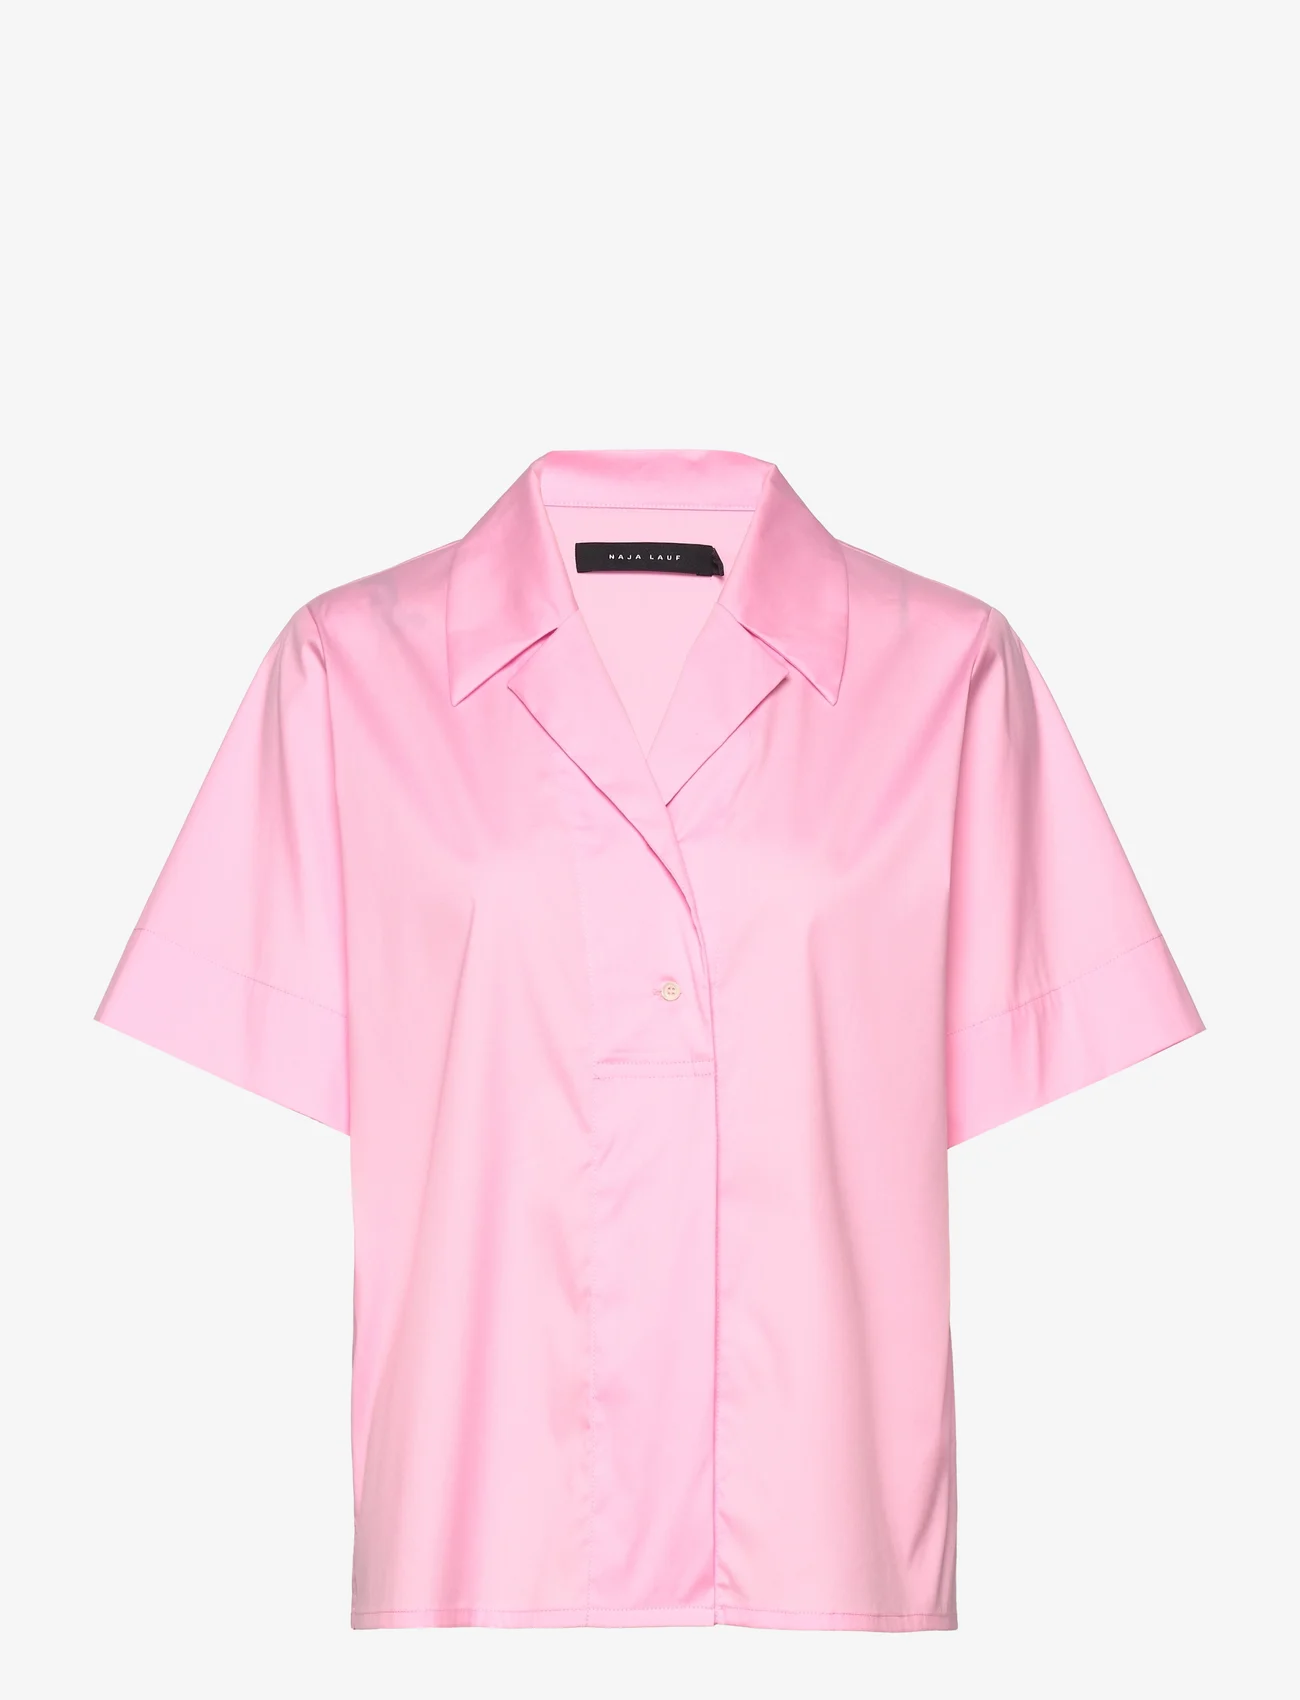 Naja Lauf - GEMMA SHIRT - kurzärmlige hemden - rose - 0